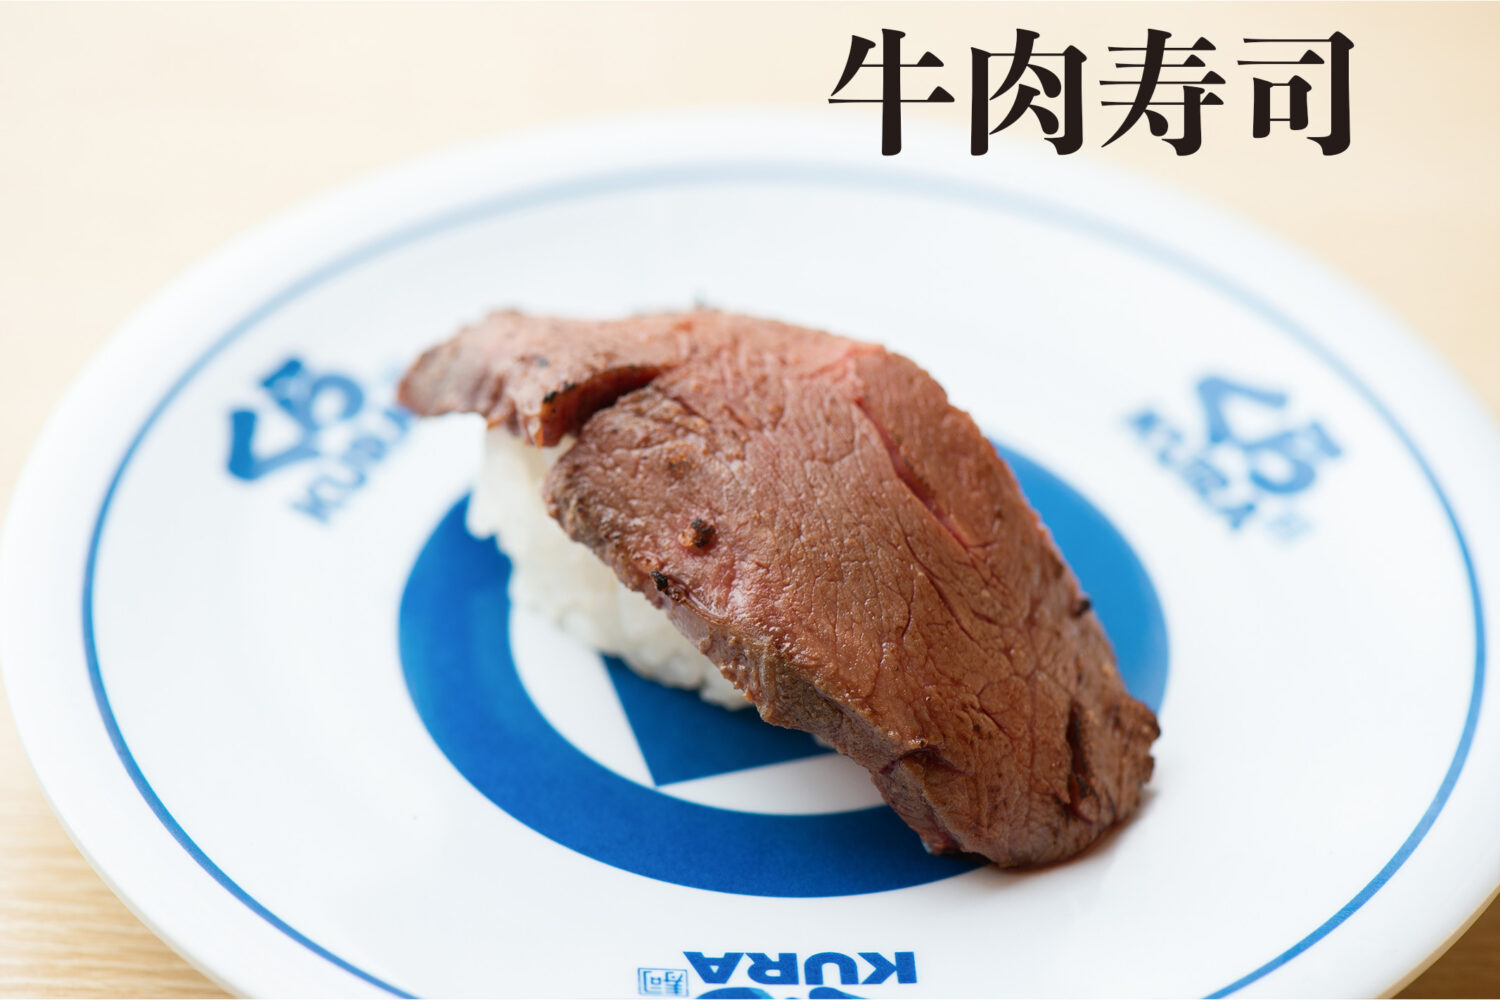 Beef Sushi　牛肉寿司　gyu-niku zushi